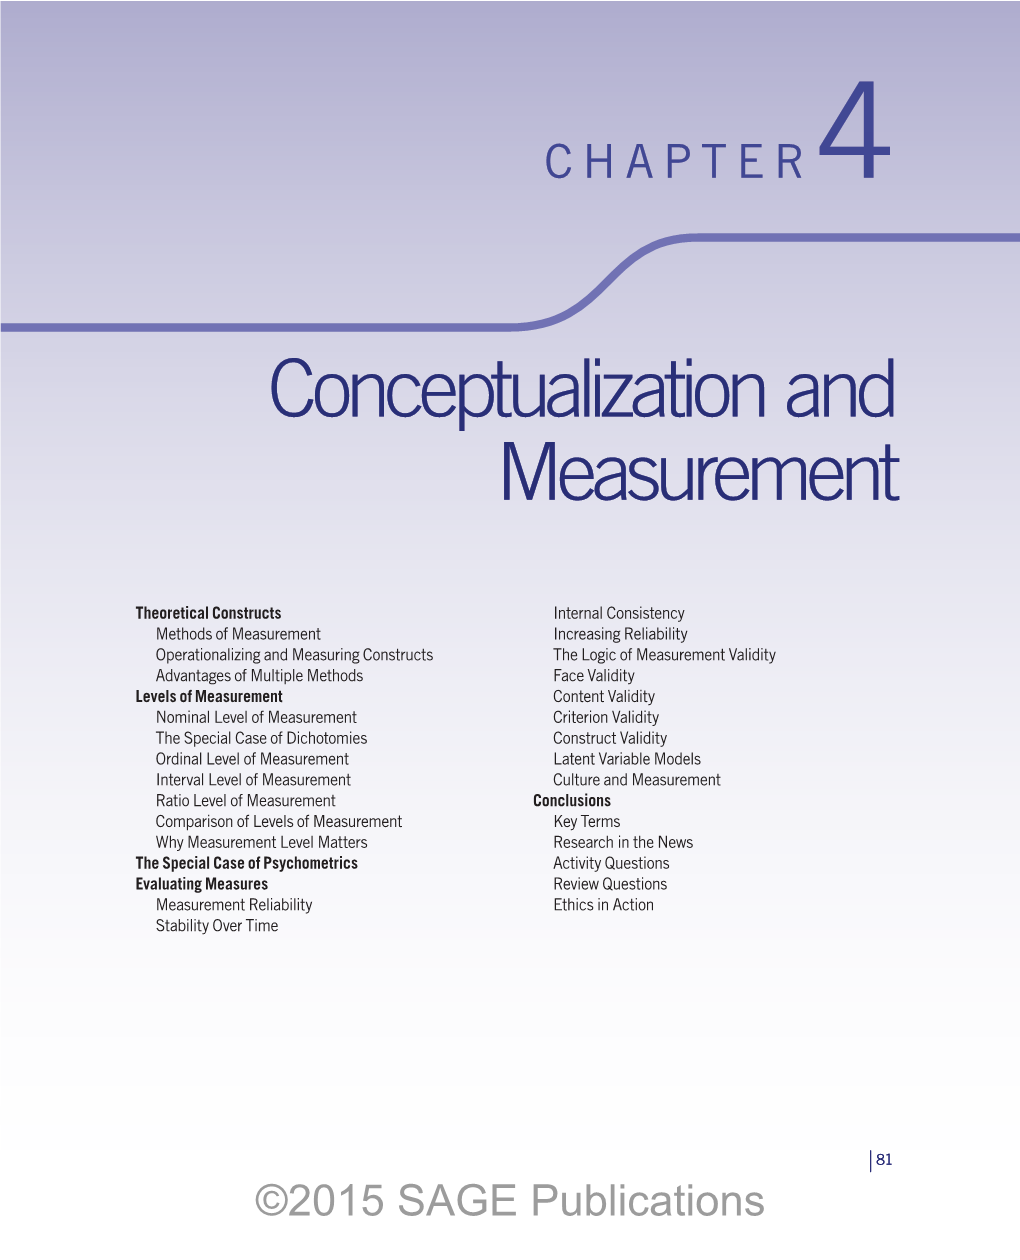 Conceptualization and Measurement